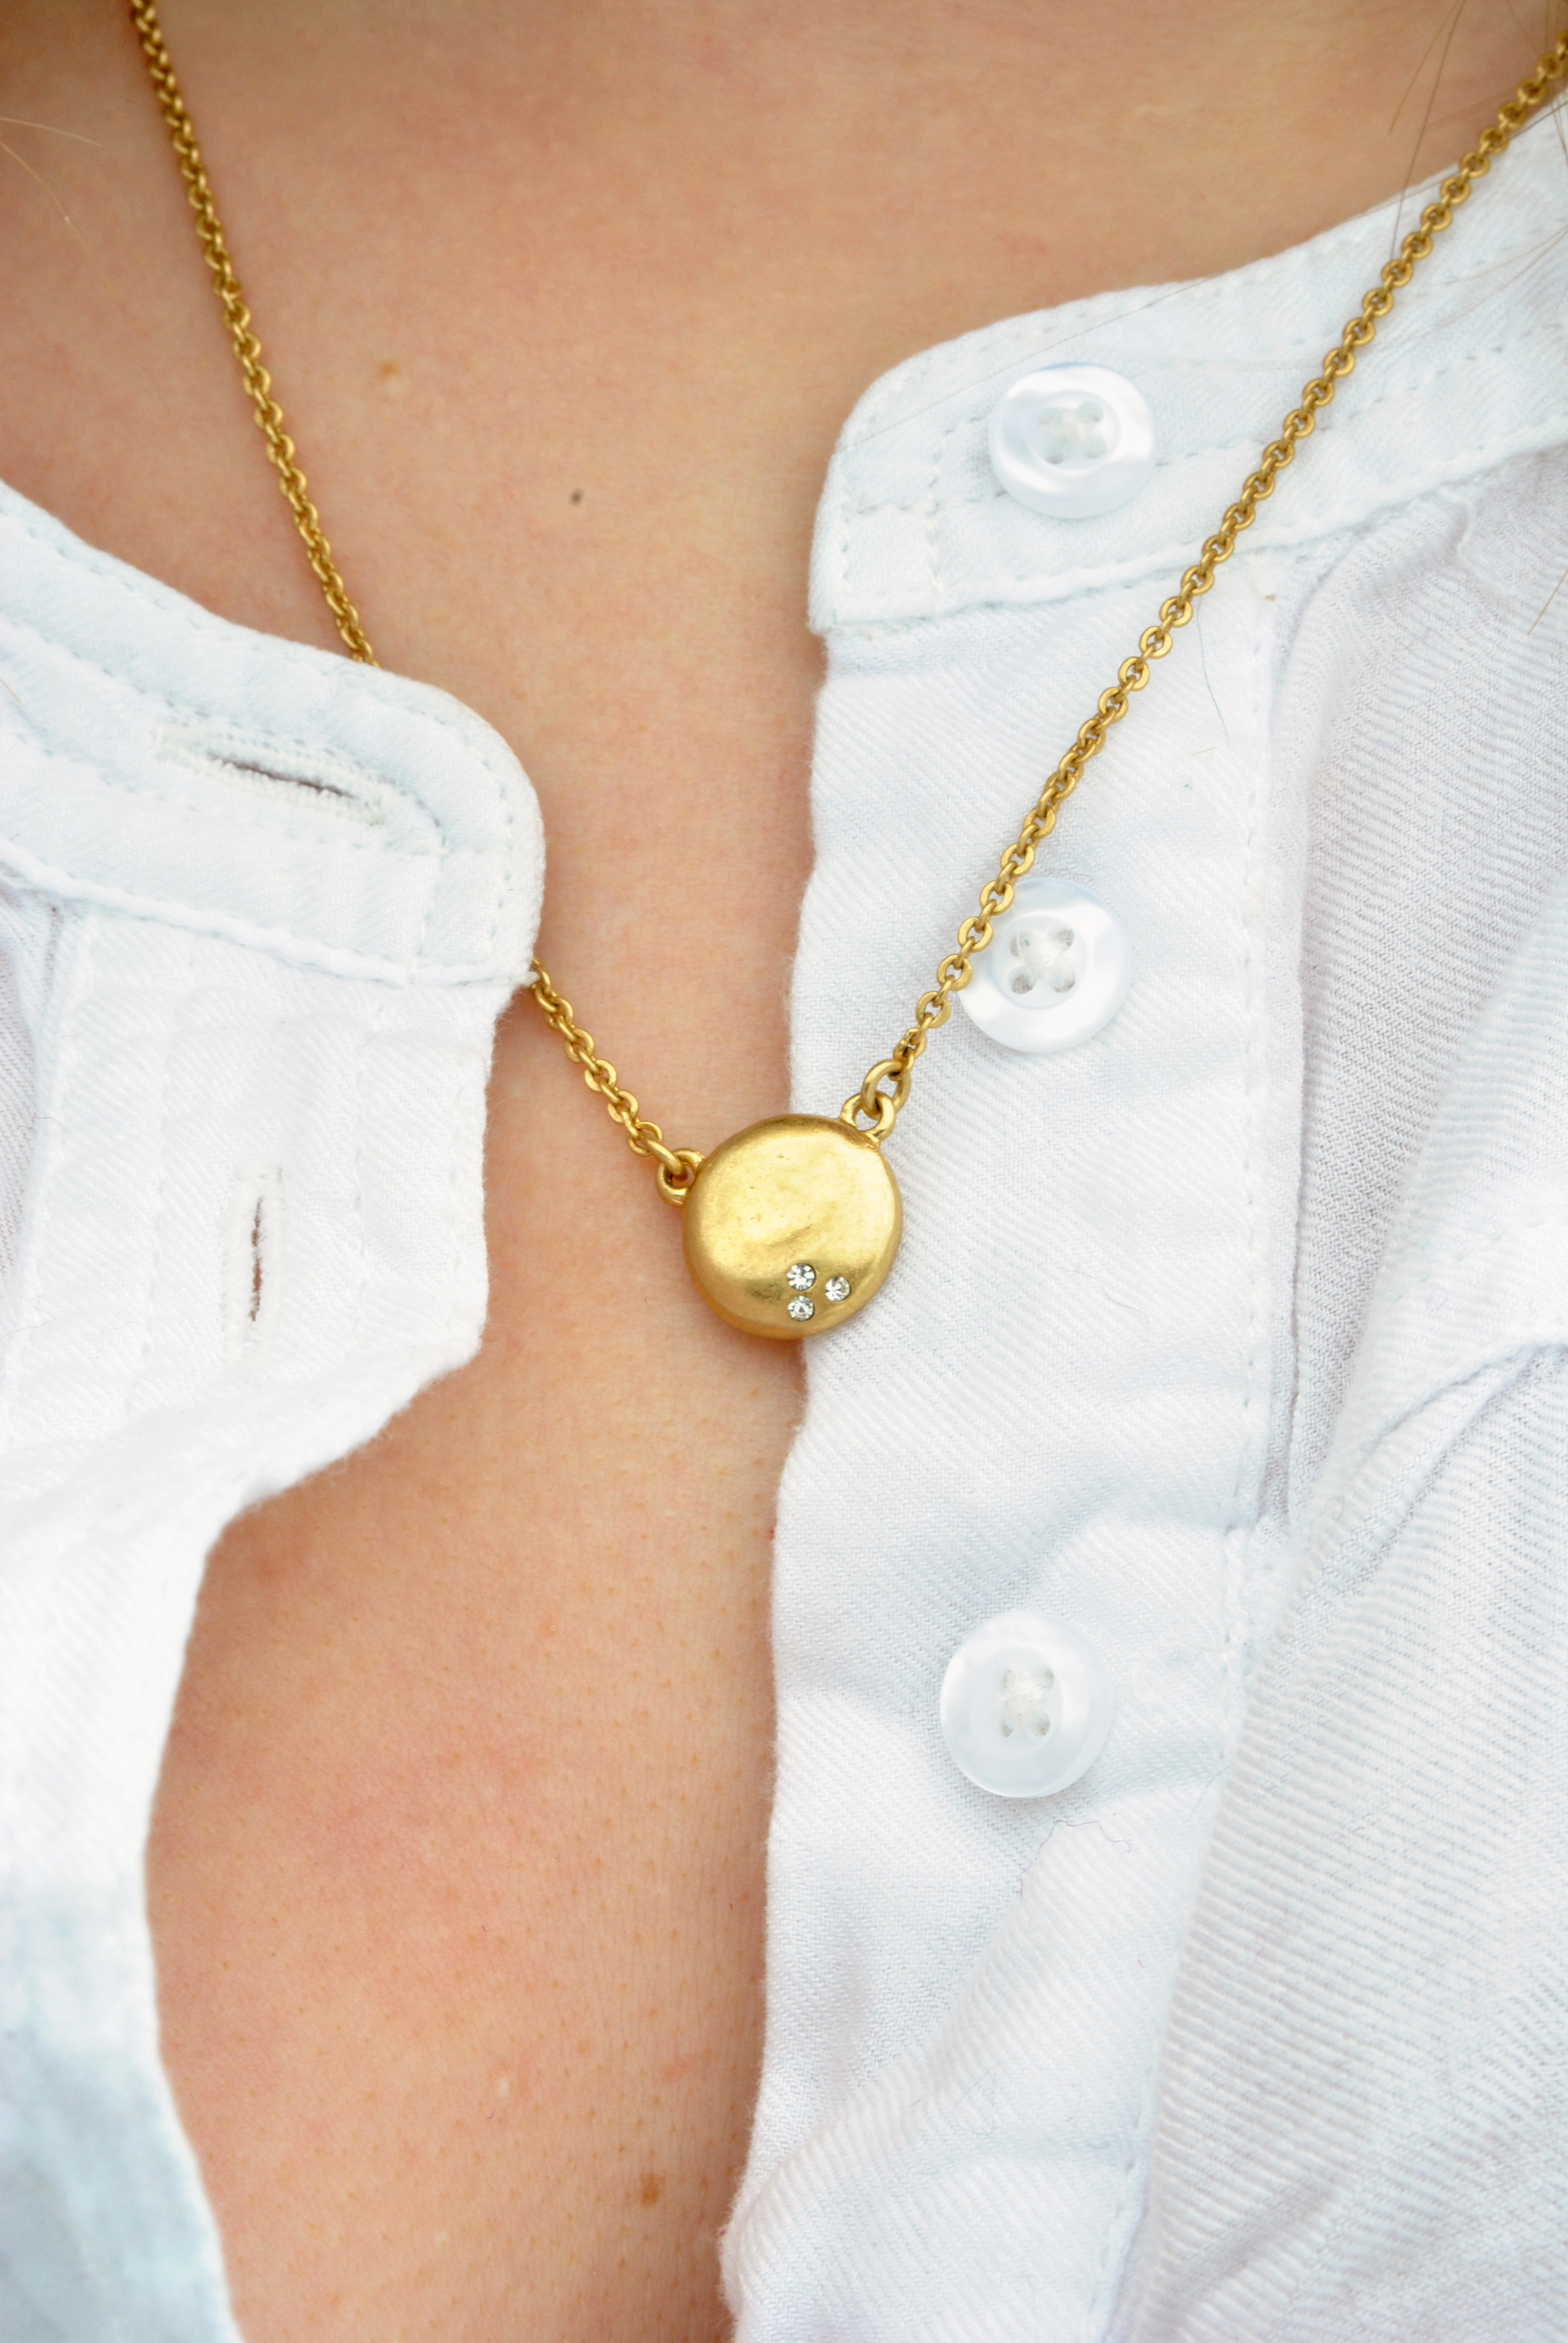 gold pendant necklace from Chloe+Isabel | thoughtfulwish